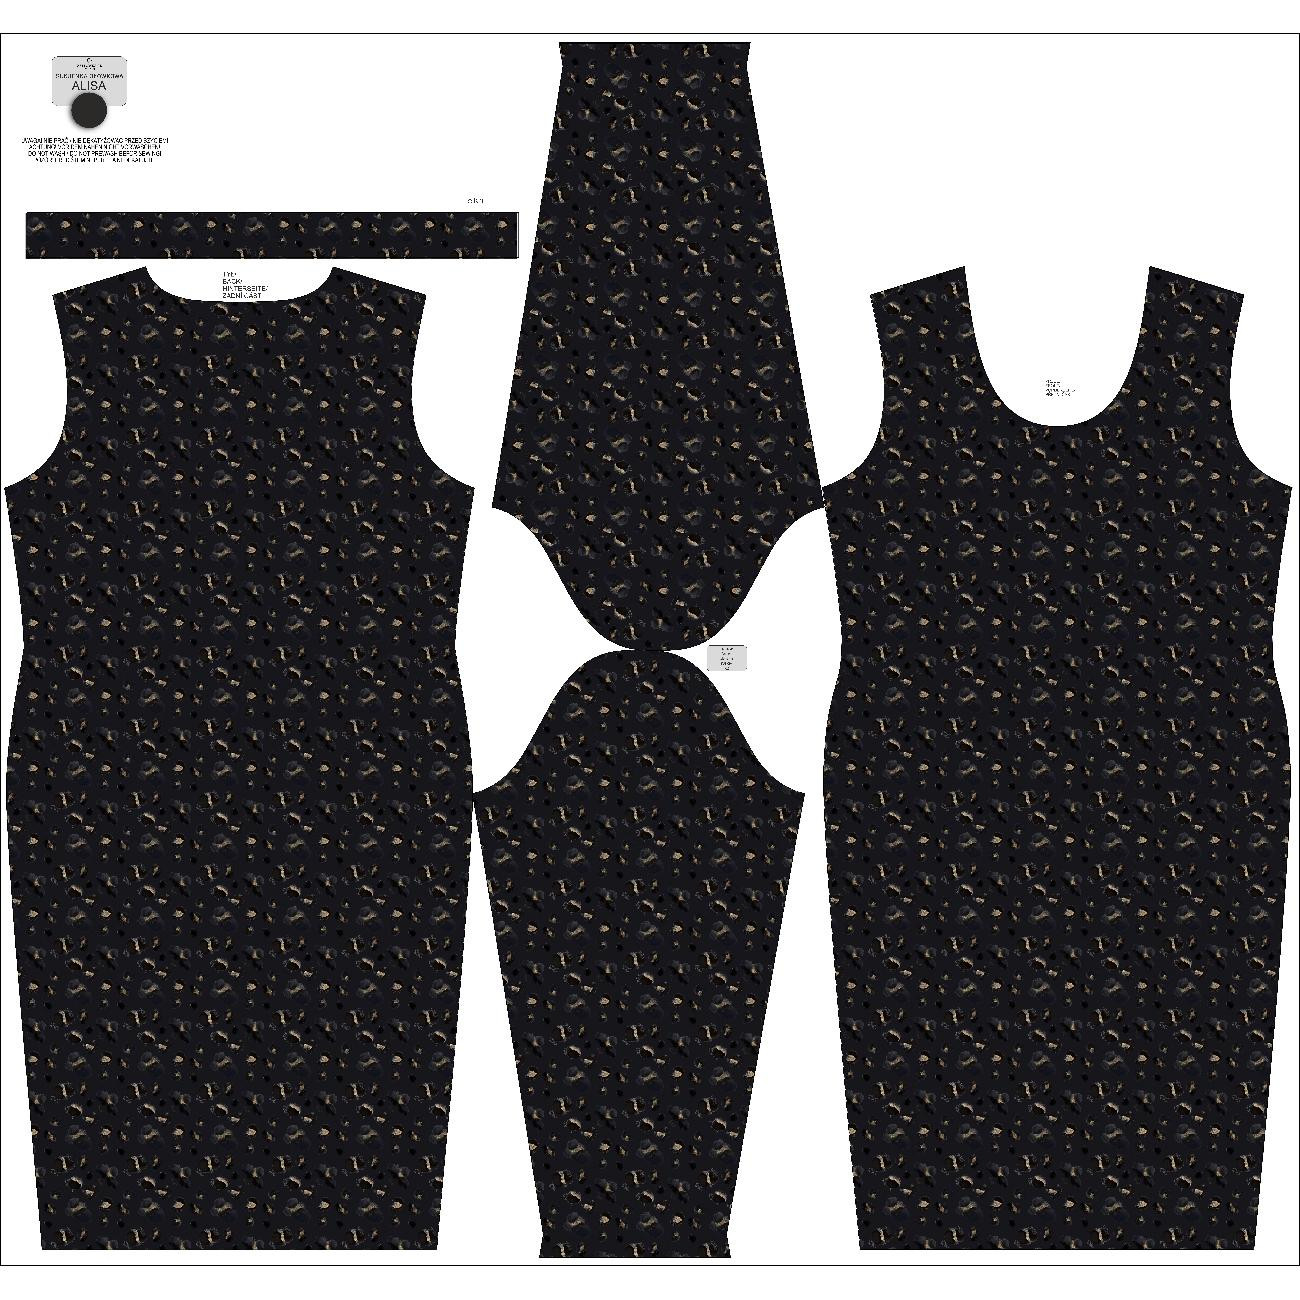 PENCIL DRESS (ALISA) - PANTHER Pat. 3 - sewing set